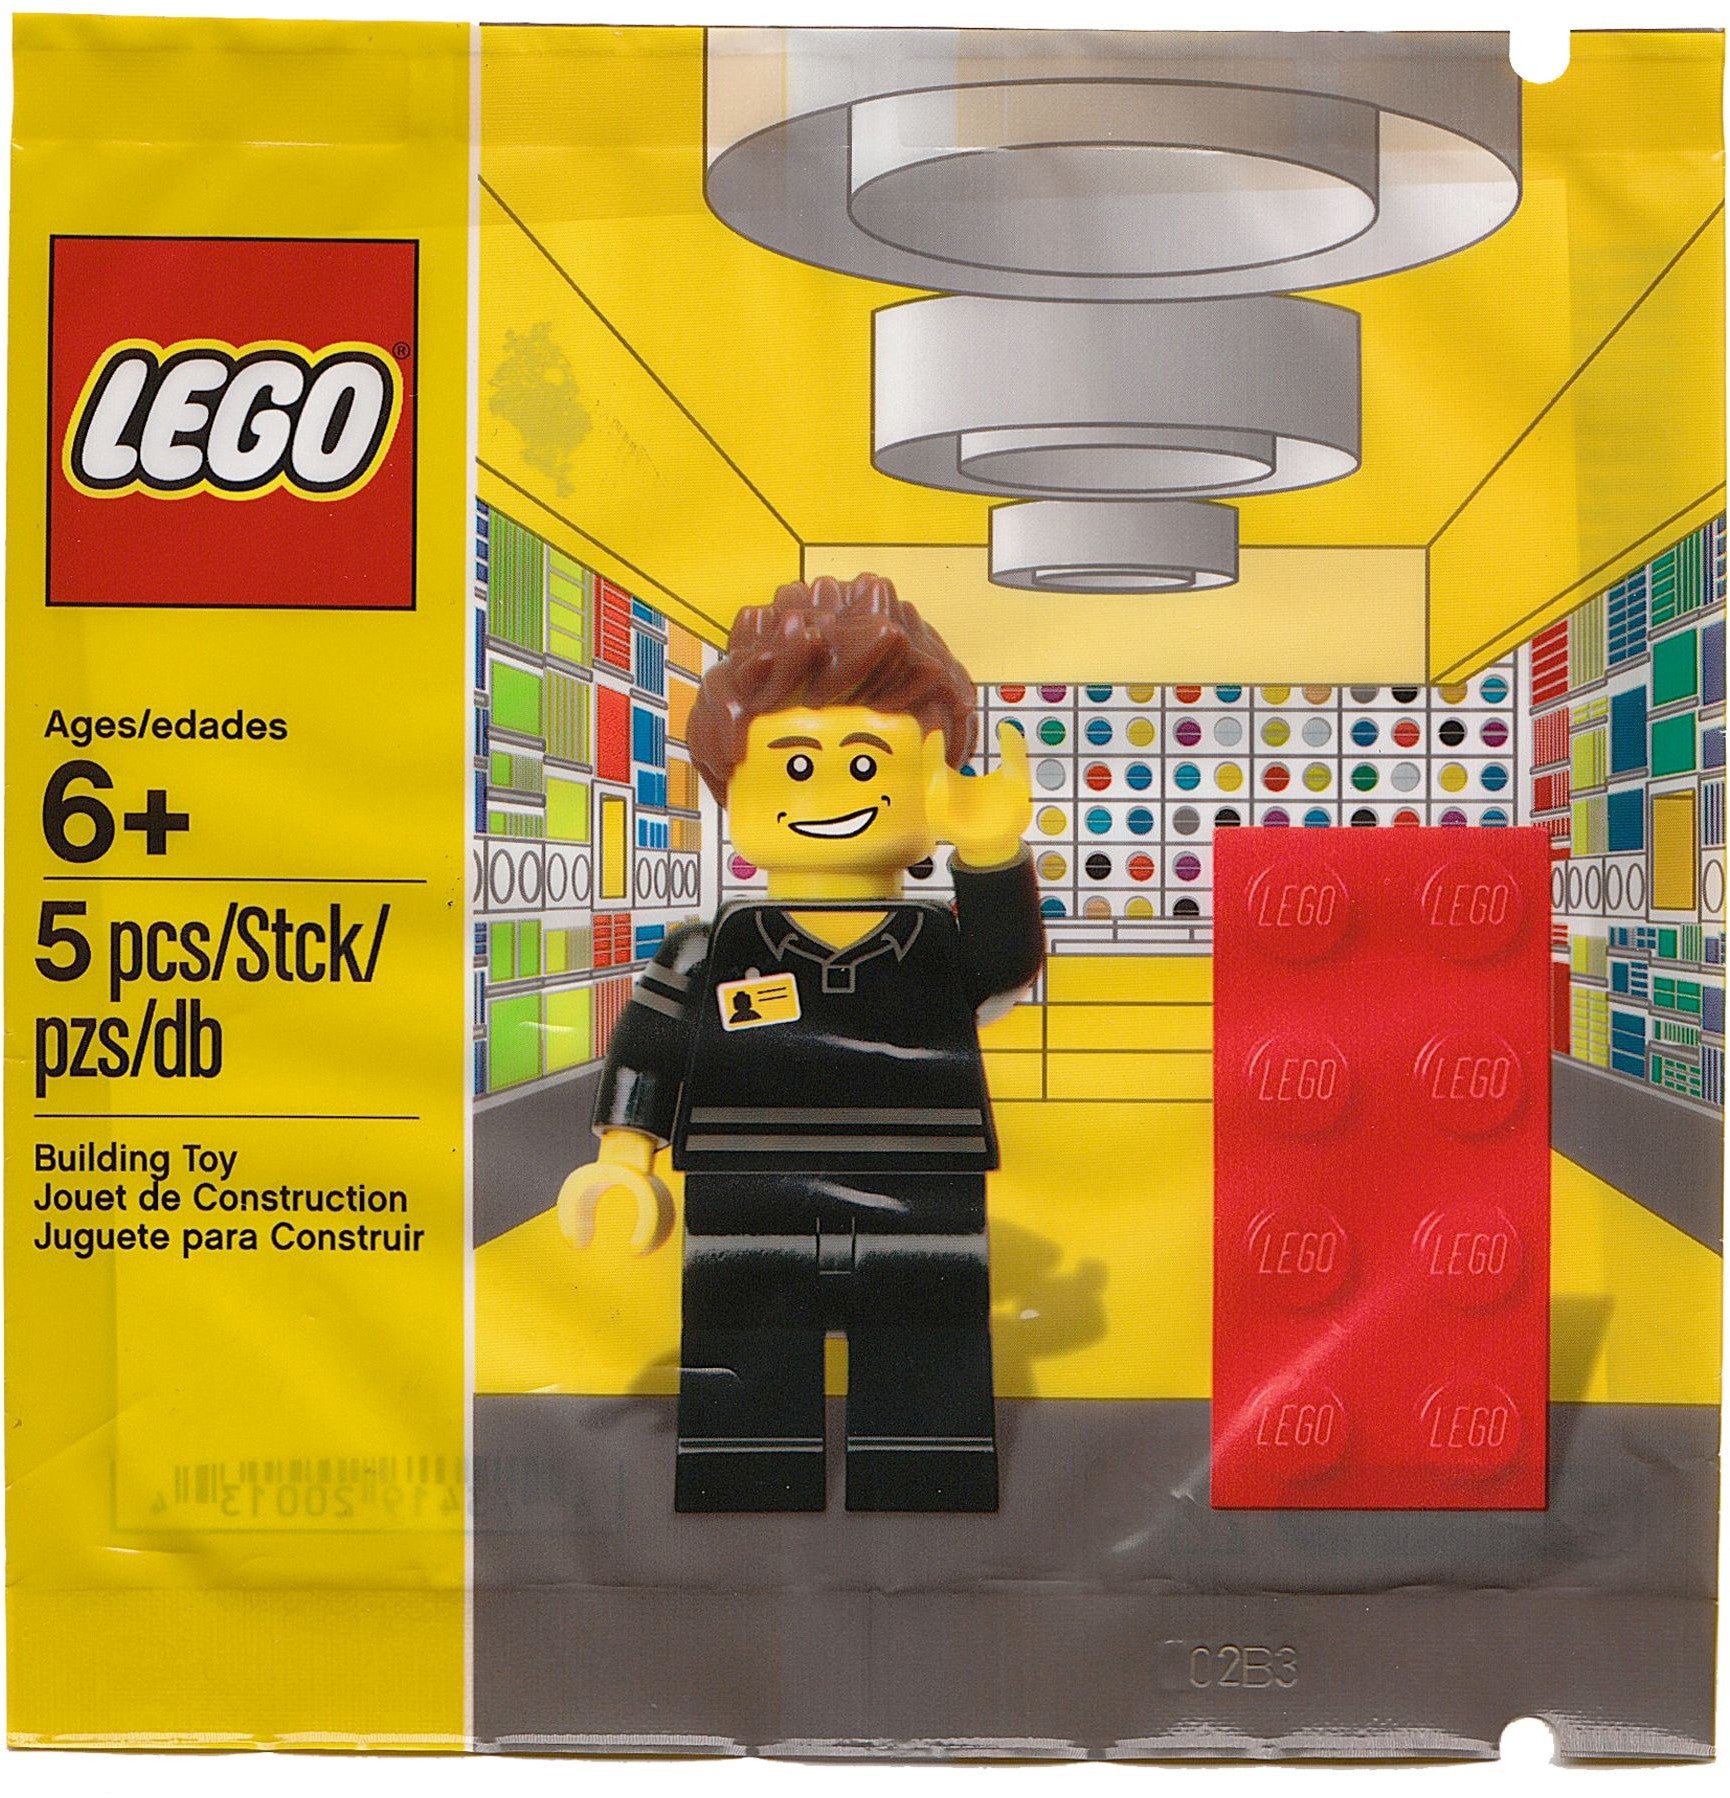 LEGO Store Employee - 5001622 Display for Lego Minifigures